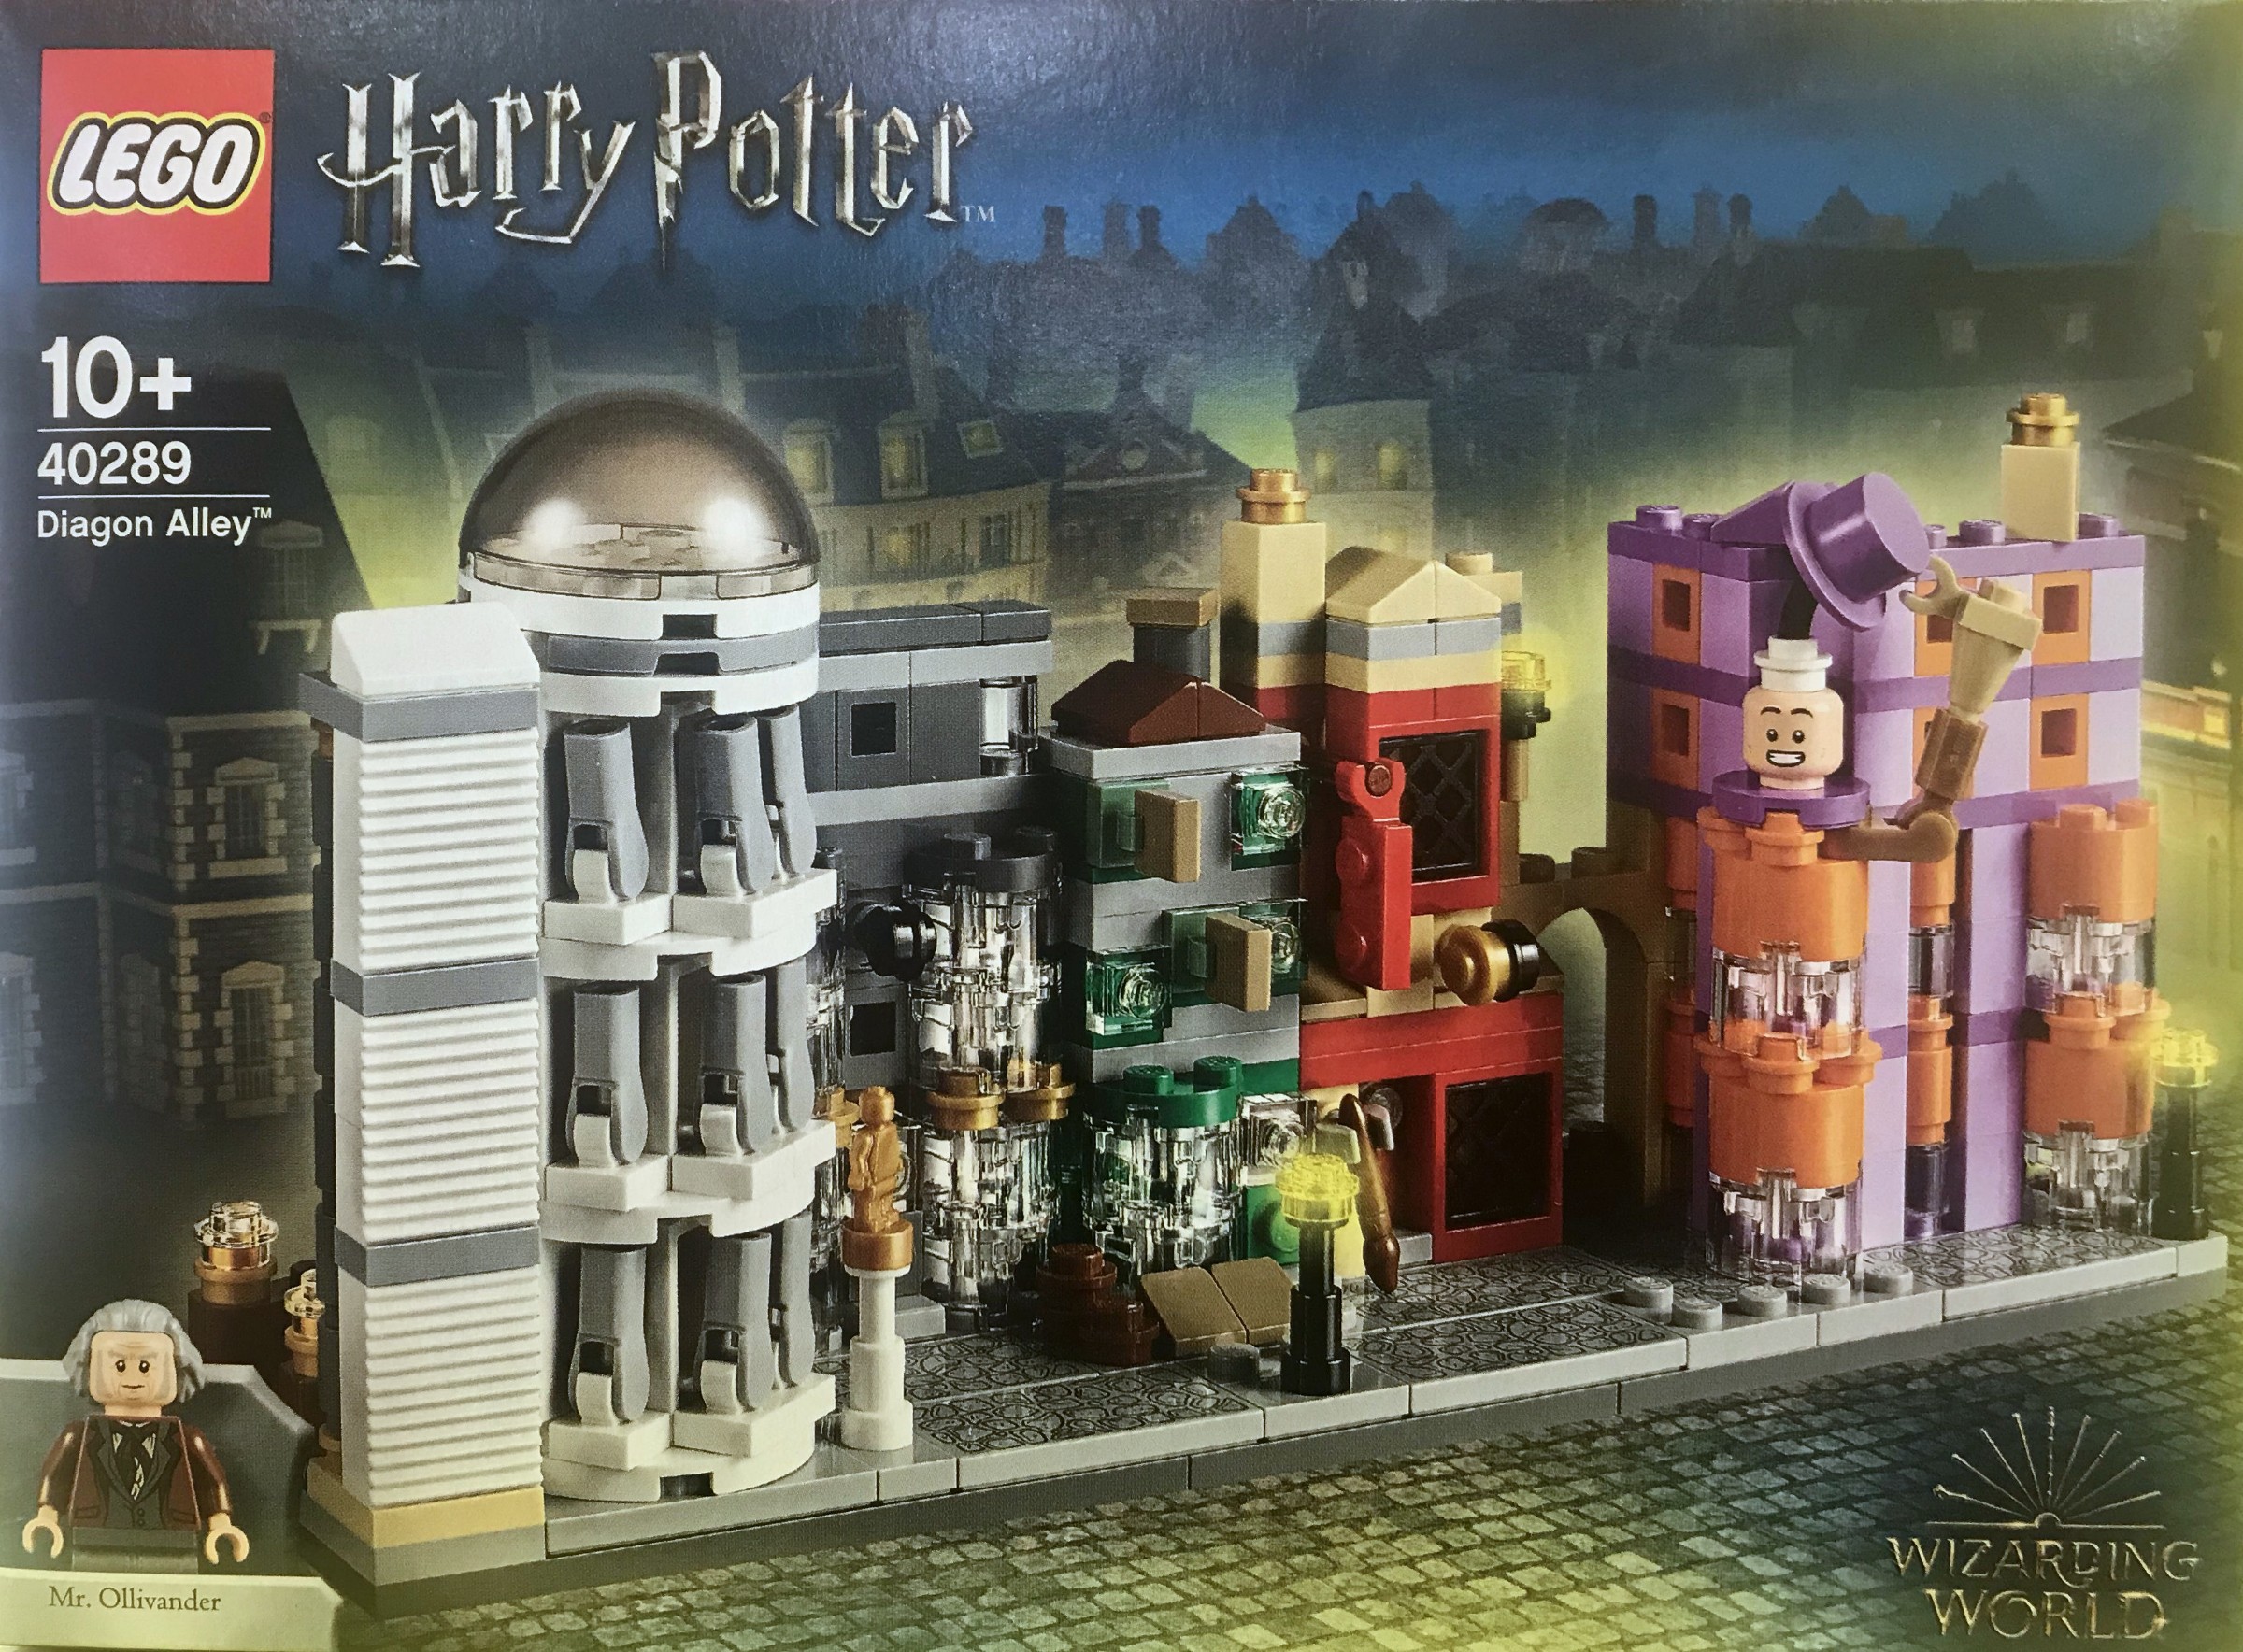 Nouveauté LEGO Harry Potter 40289 Diagon Alley : le Chemin de Traverse  version microscale - HelloBricks